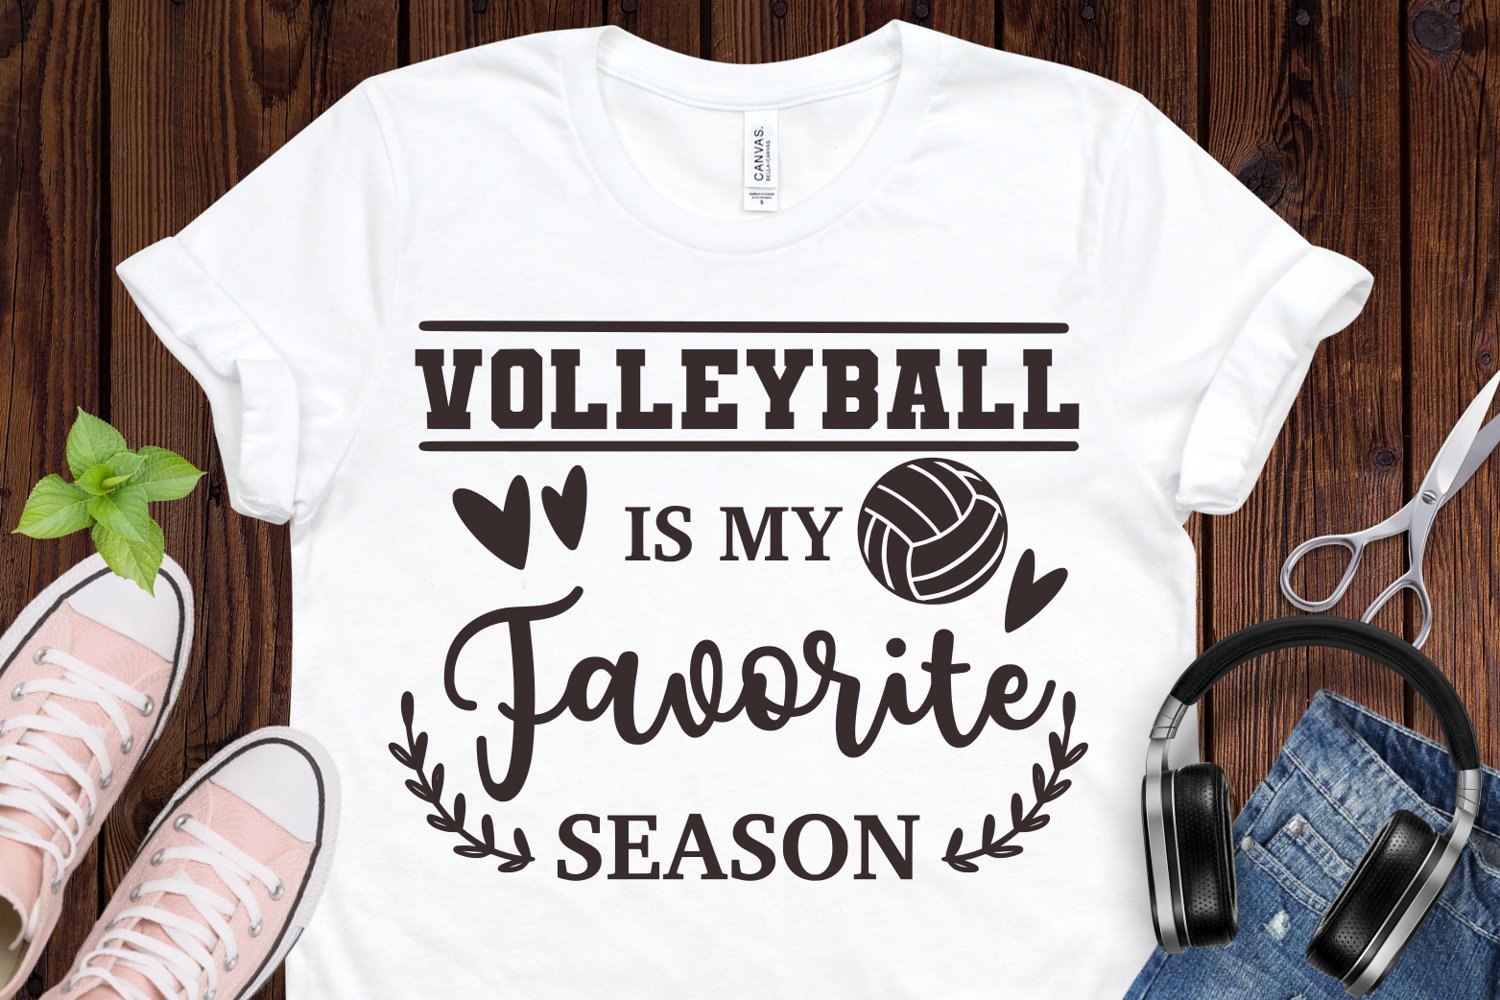 Volleyball is my favorite season - t-shirt design.